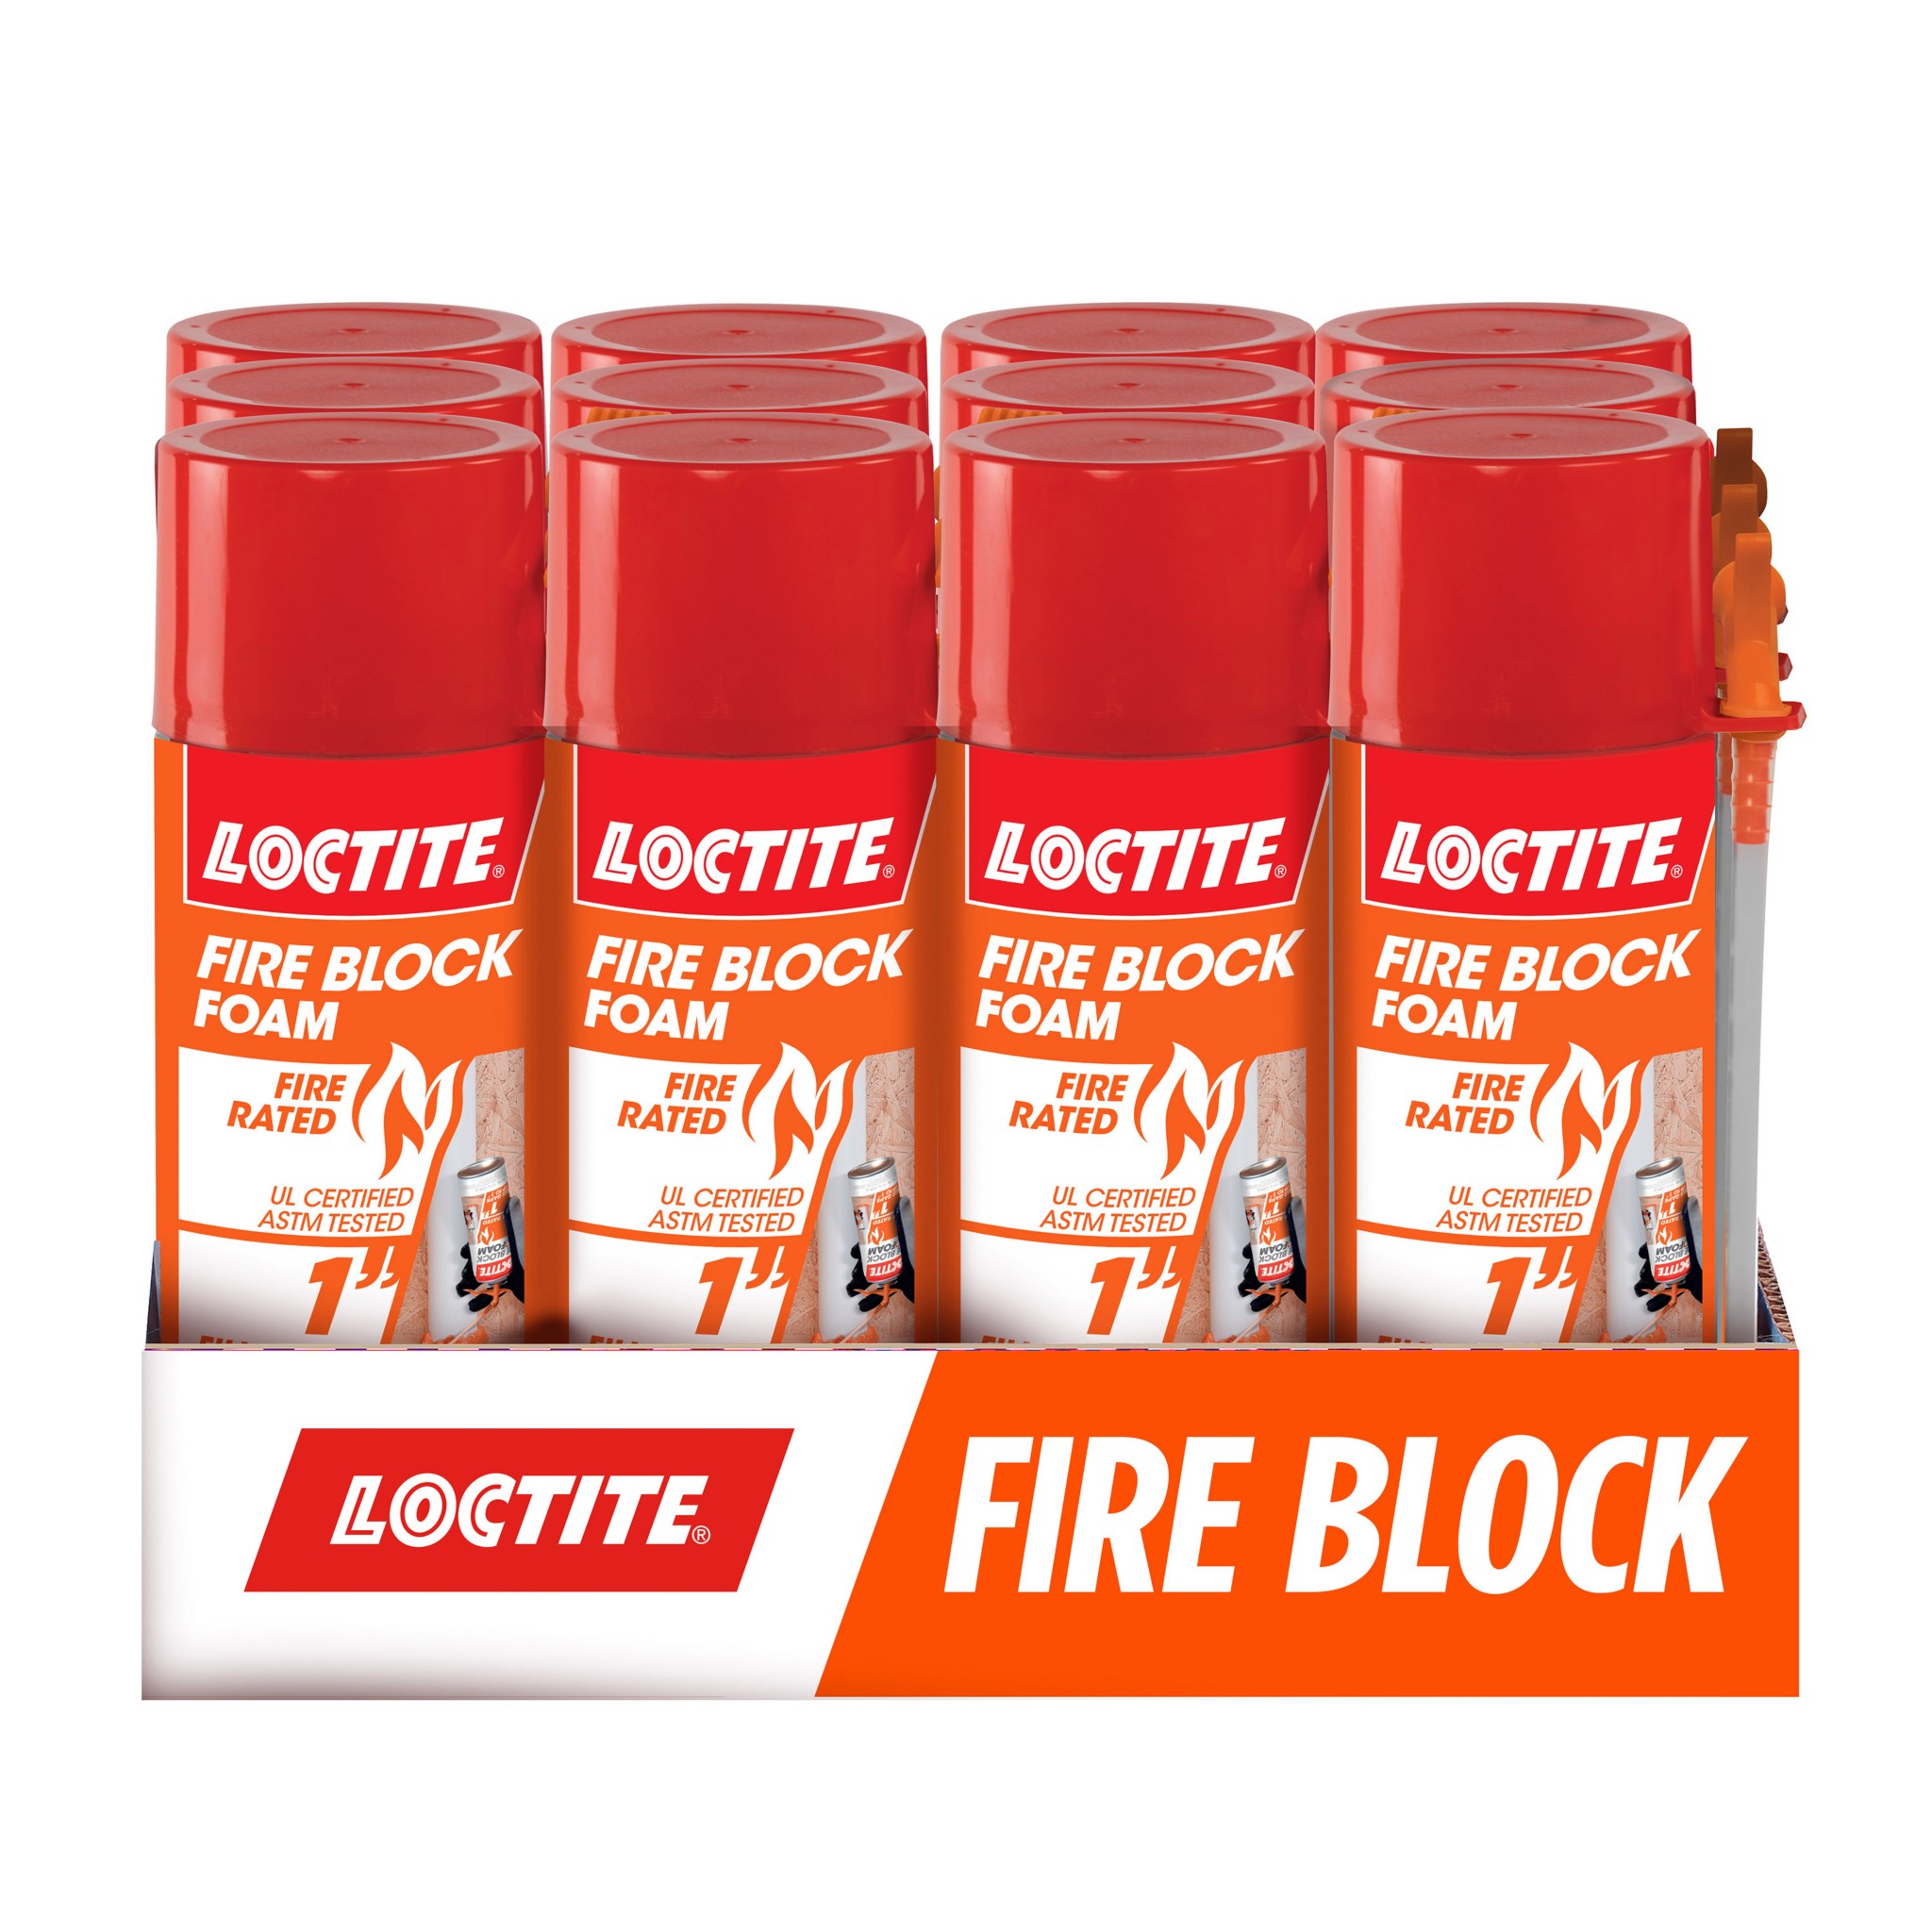 Loctite Fire Block Foam